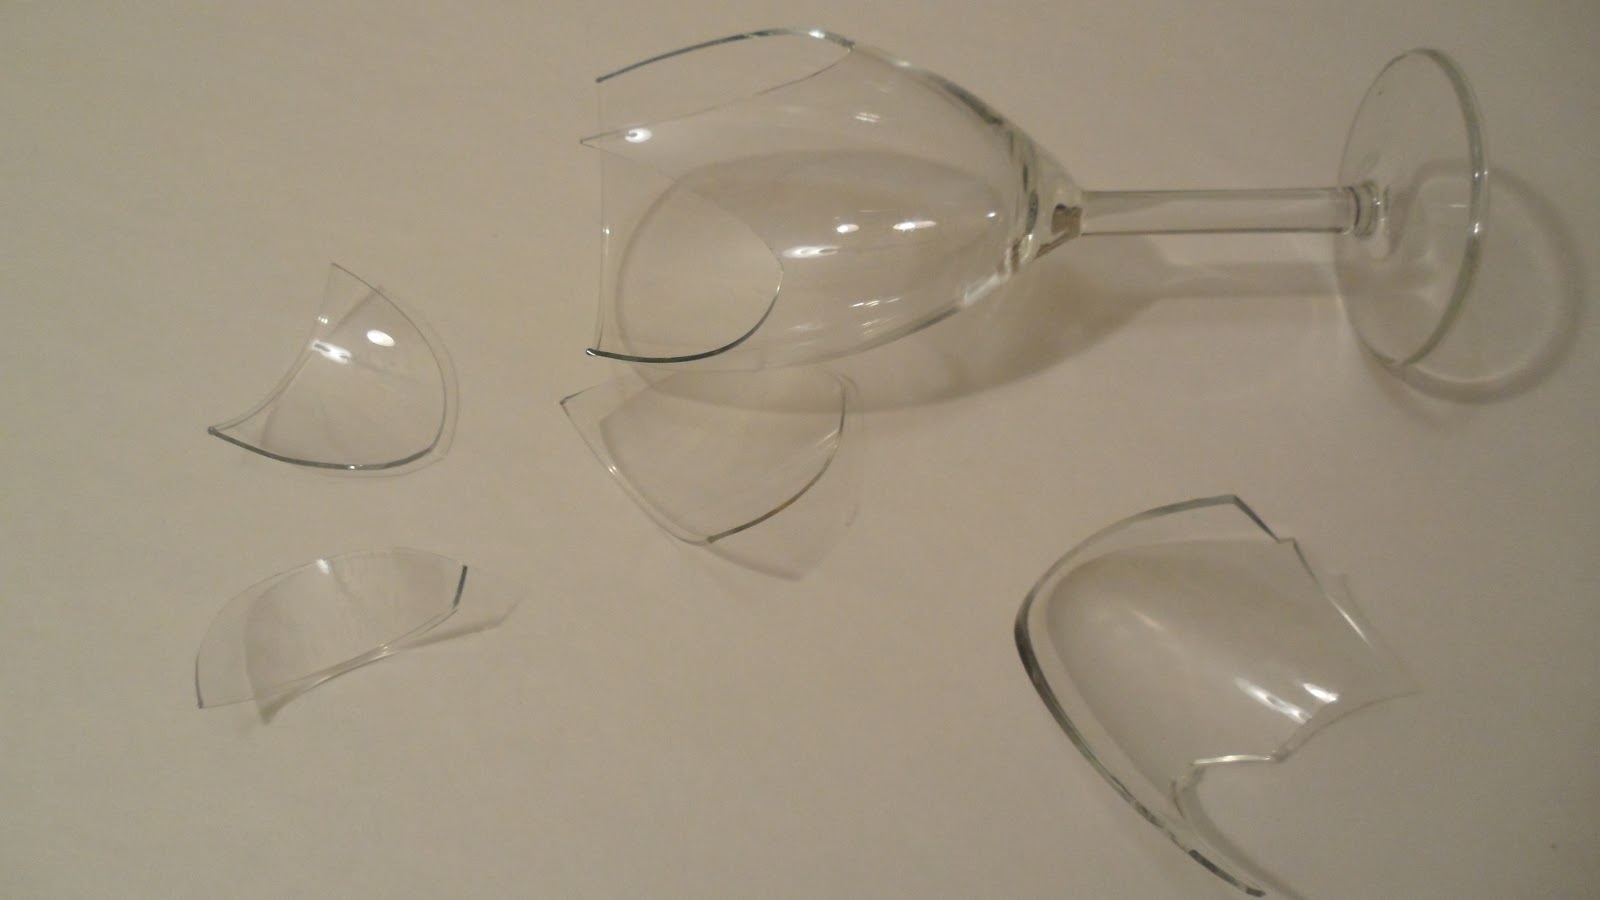 Разбилась стеклянный стакан. Разбитые бокалы. Разбитый стакан. Битые бокалы. Разбитое стекло бокал.